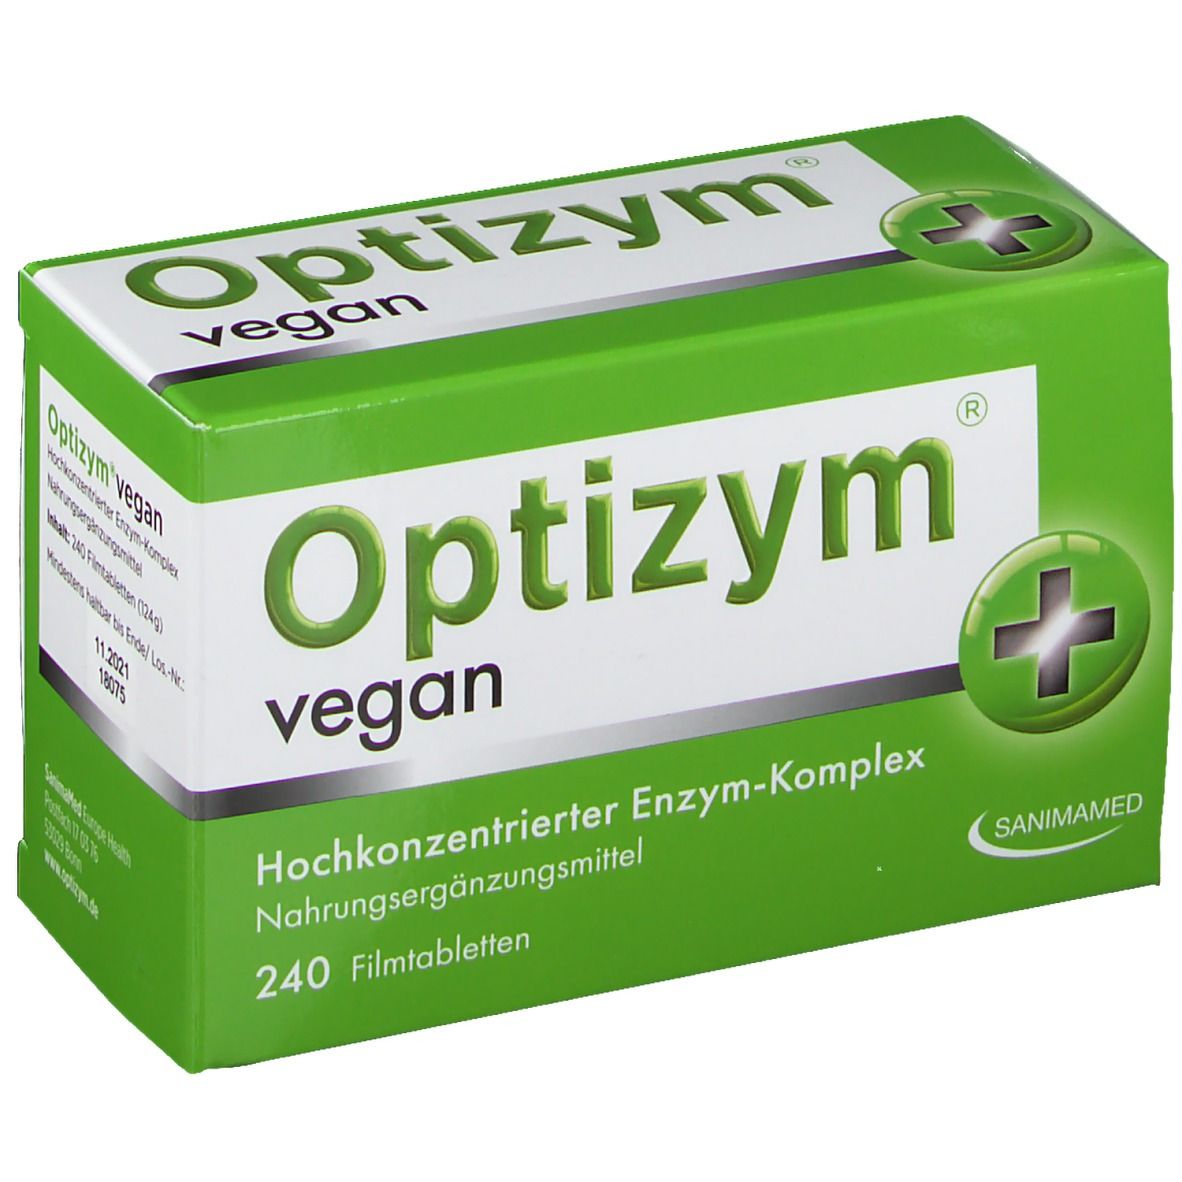 Optizym® vegan